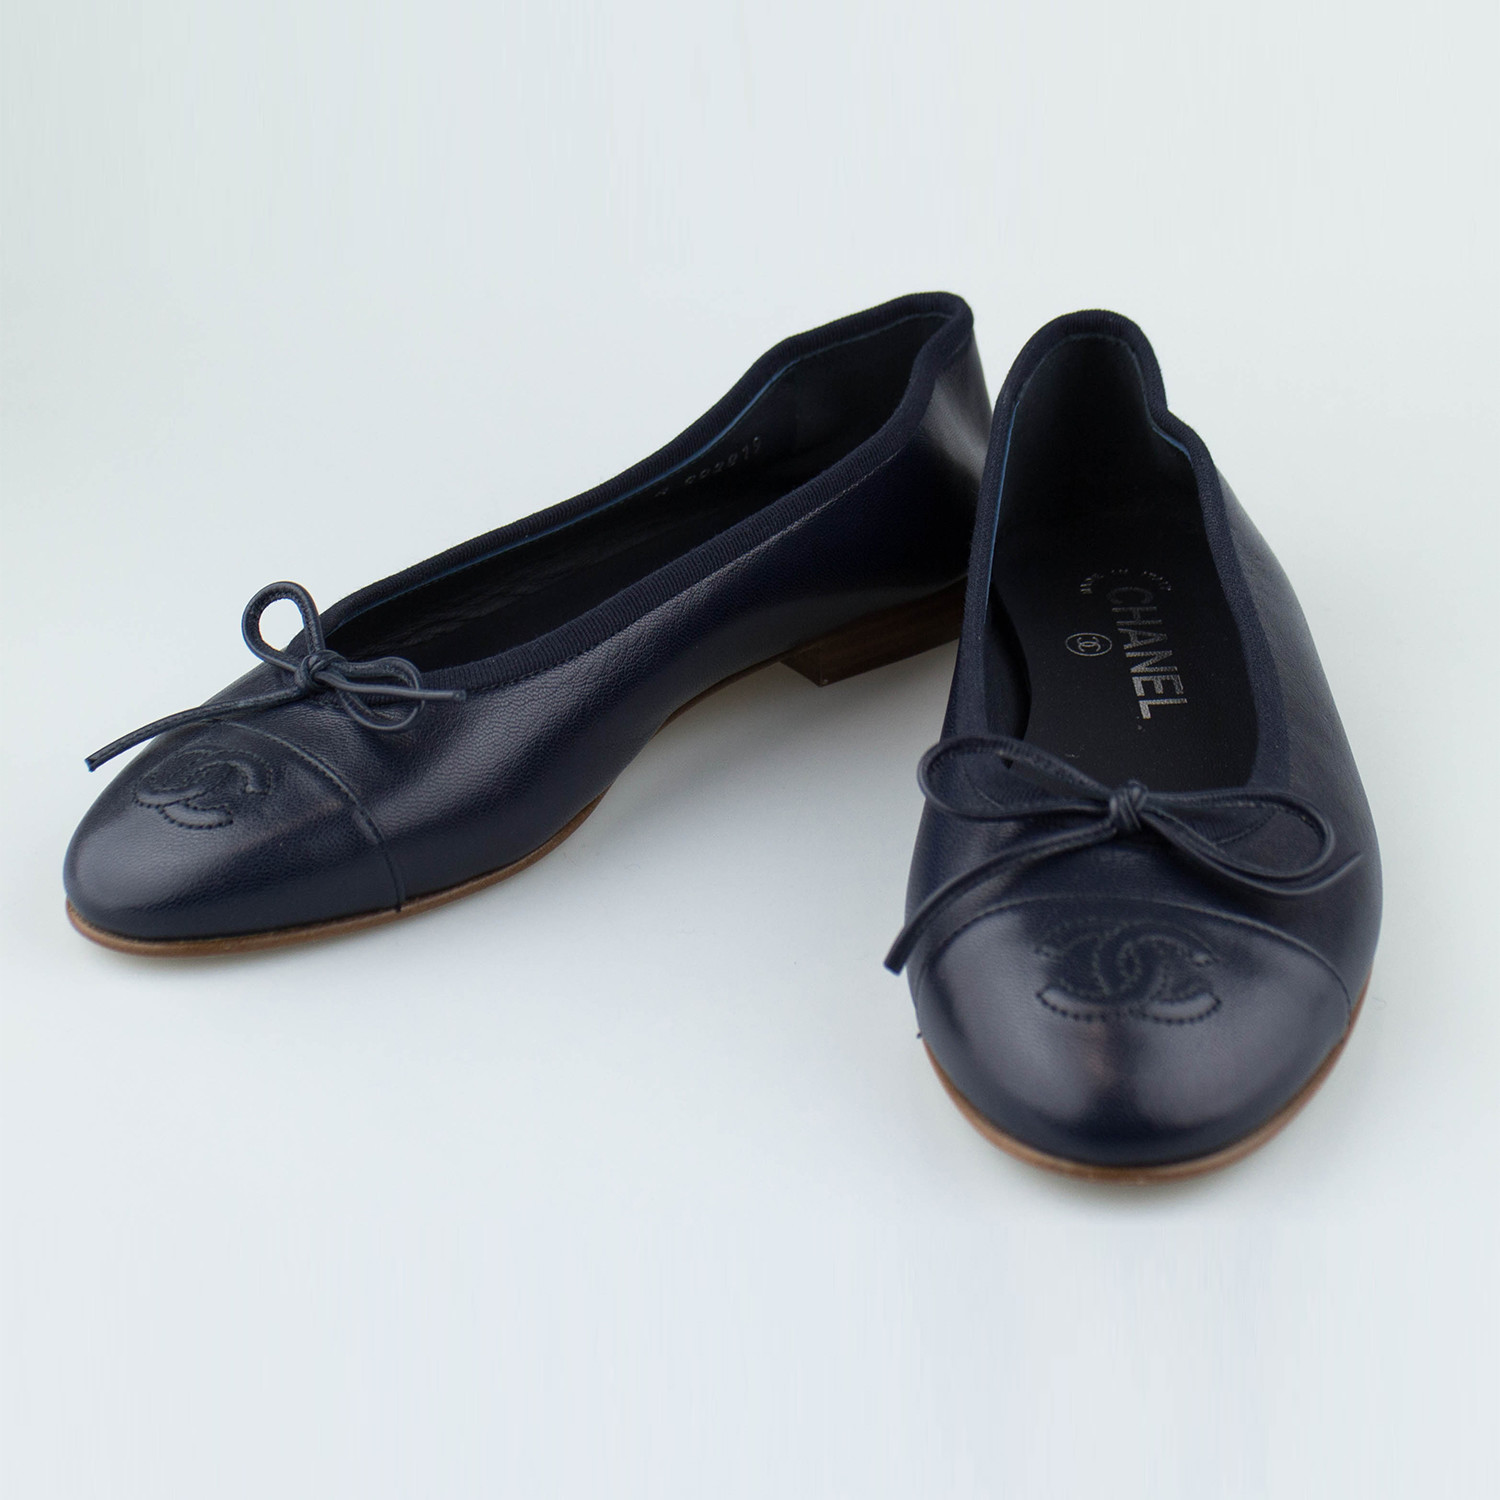 Chanel Beige/Black Leather CC Cap Toe Bow Ballet Flats Size 38 Chanel